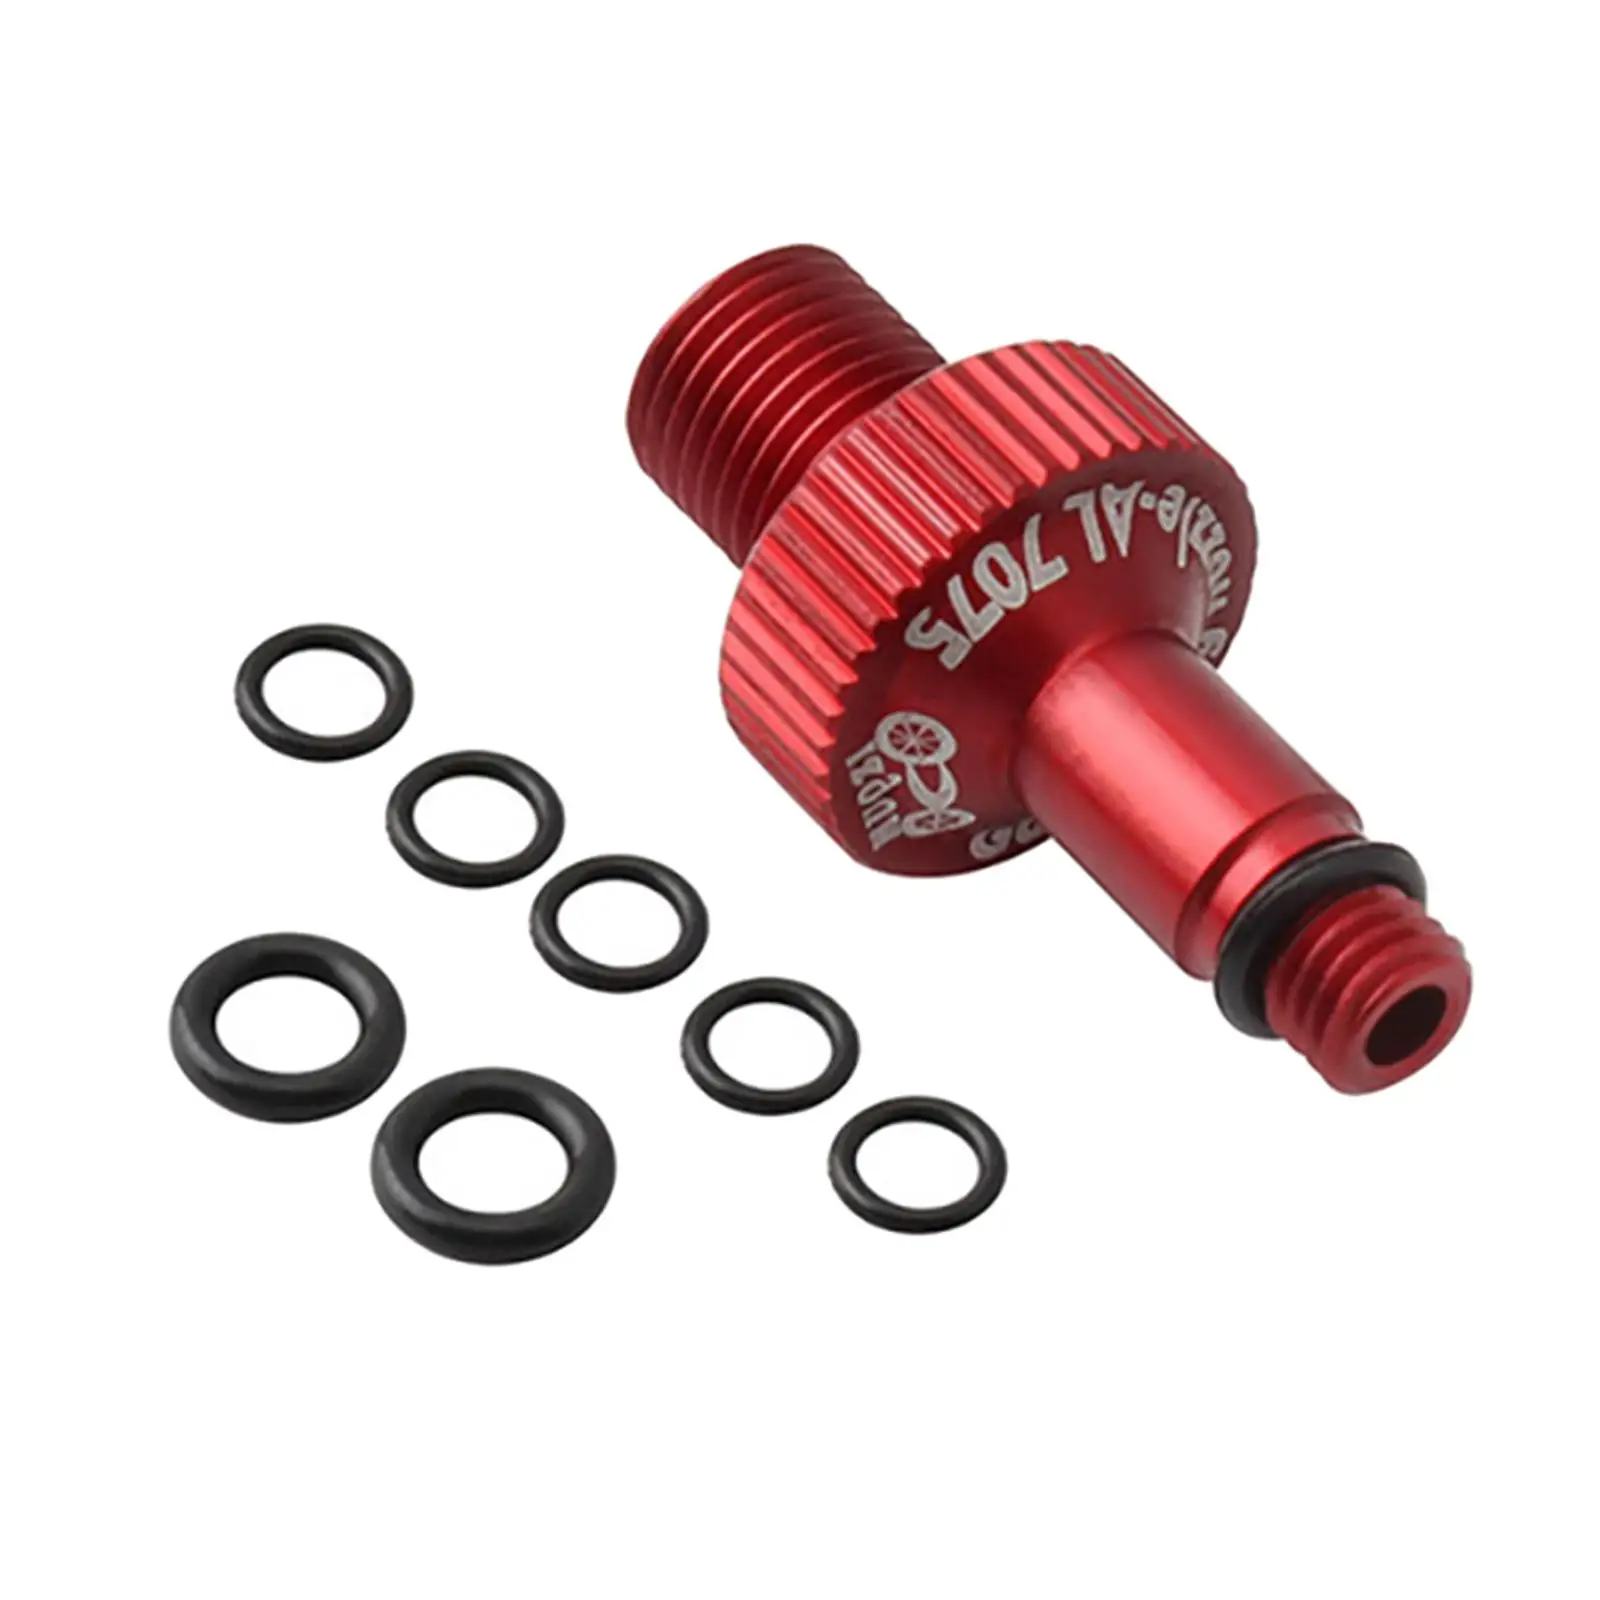 Bike Valve Adaptor Nozzle for Cycling Repair Tools Premium with Seal Rings